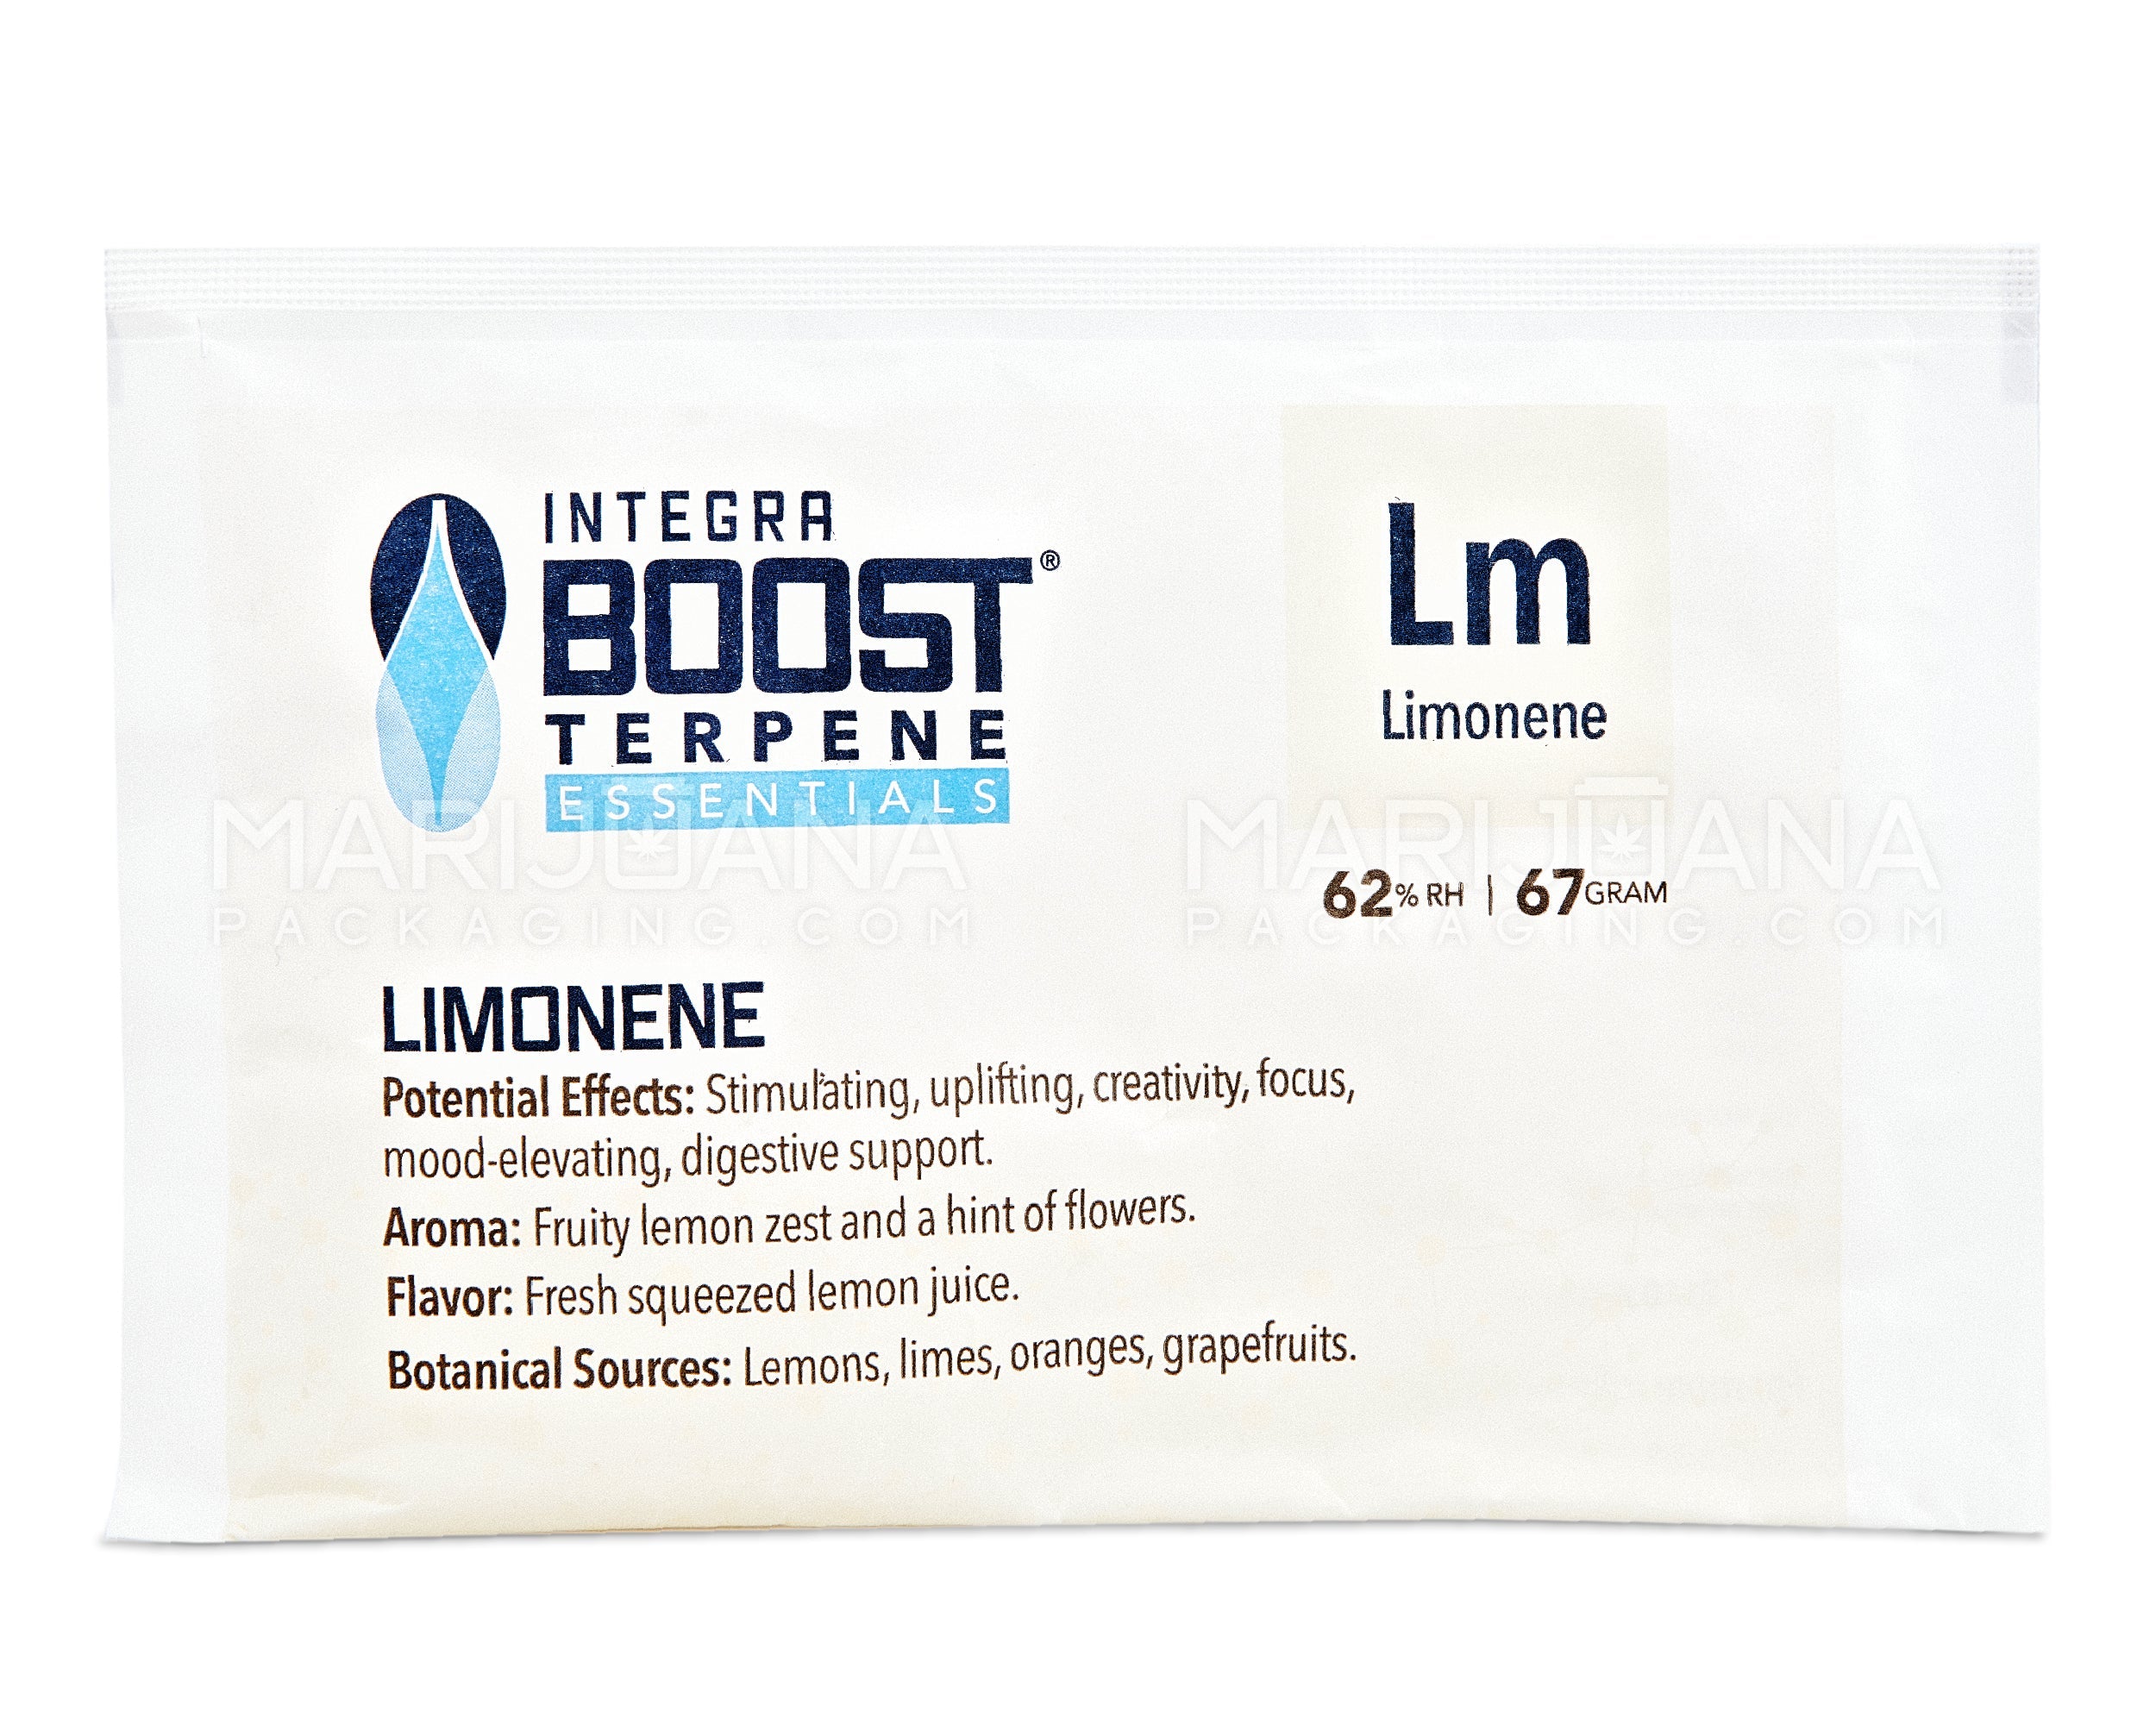 INTEGRA Boost Terpene Essentials Limonene Humidity Pack | 67 Grams - 62% | Sample - 1